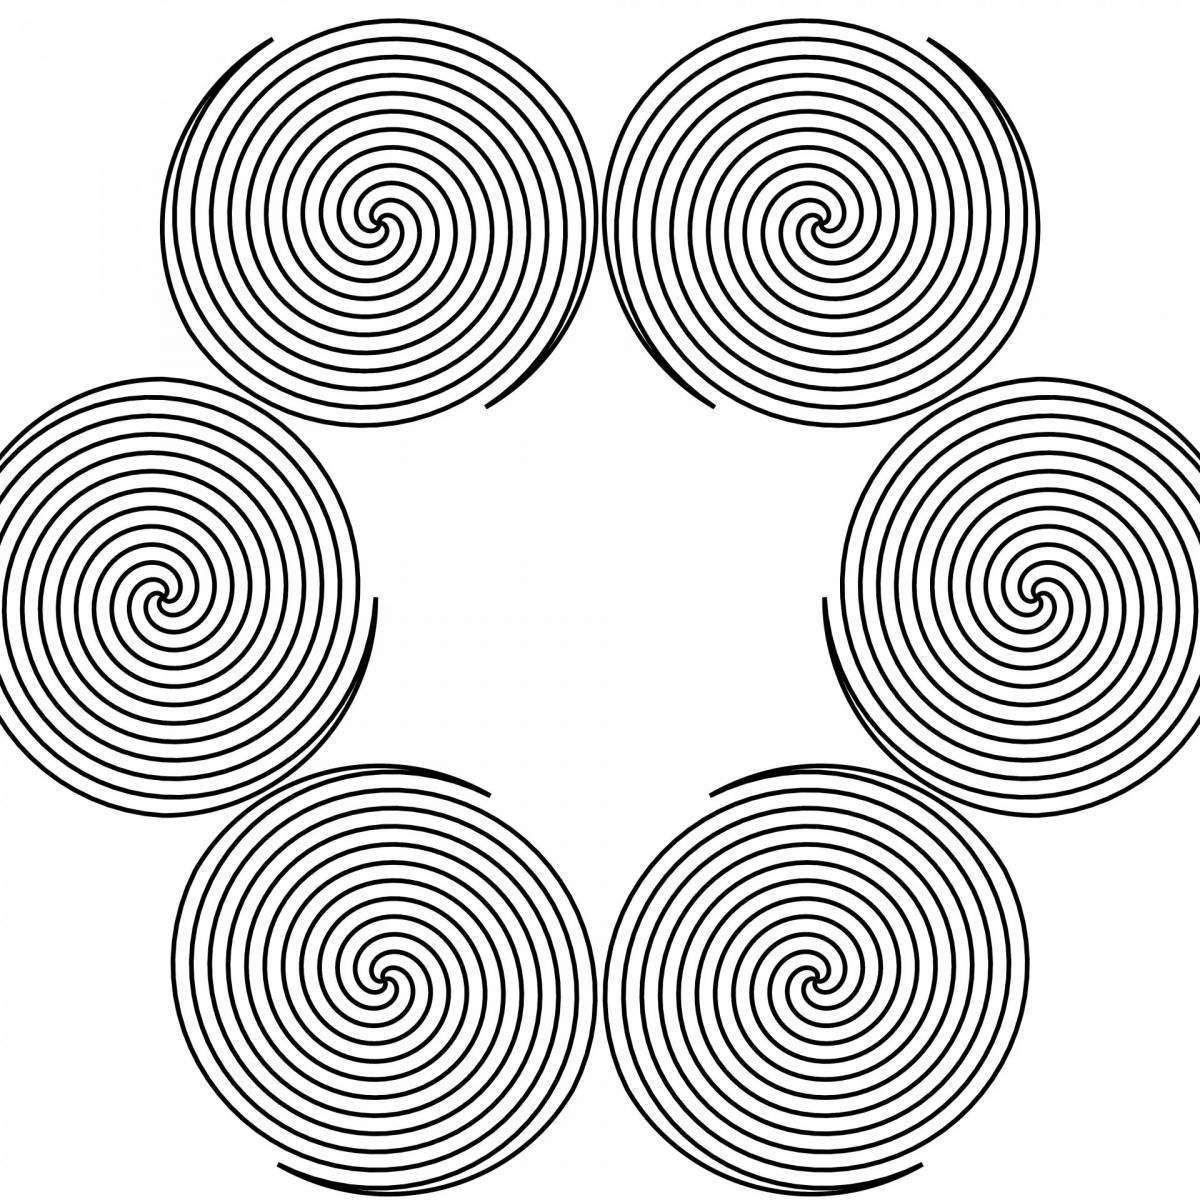 Coloring splendid circular pattern spiral